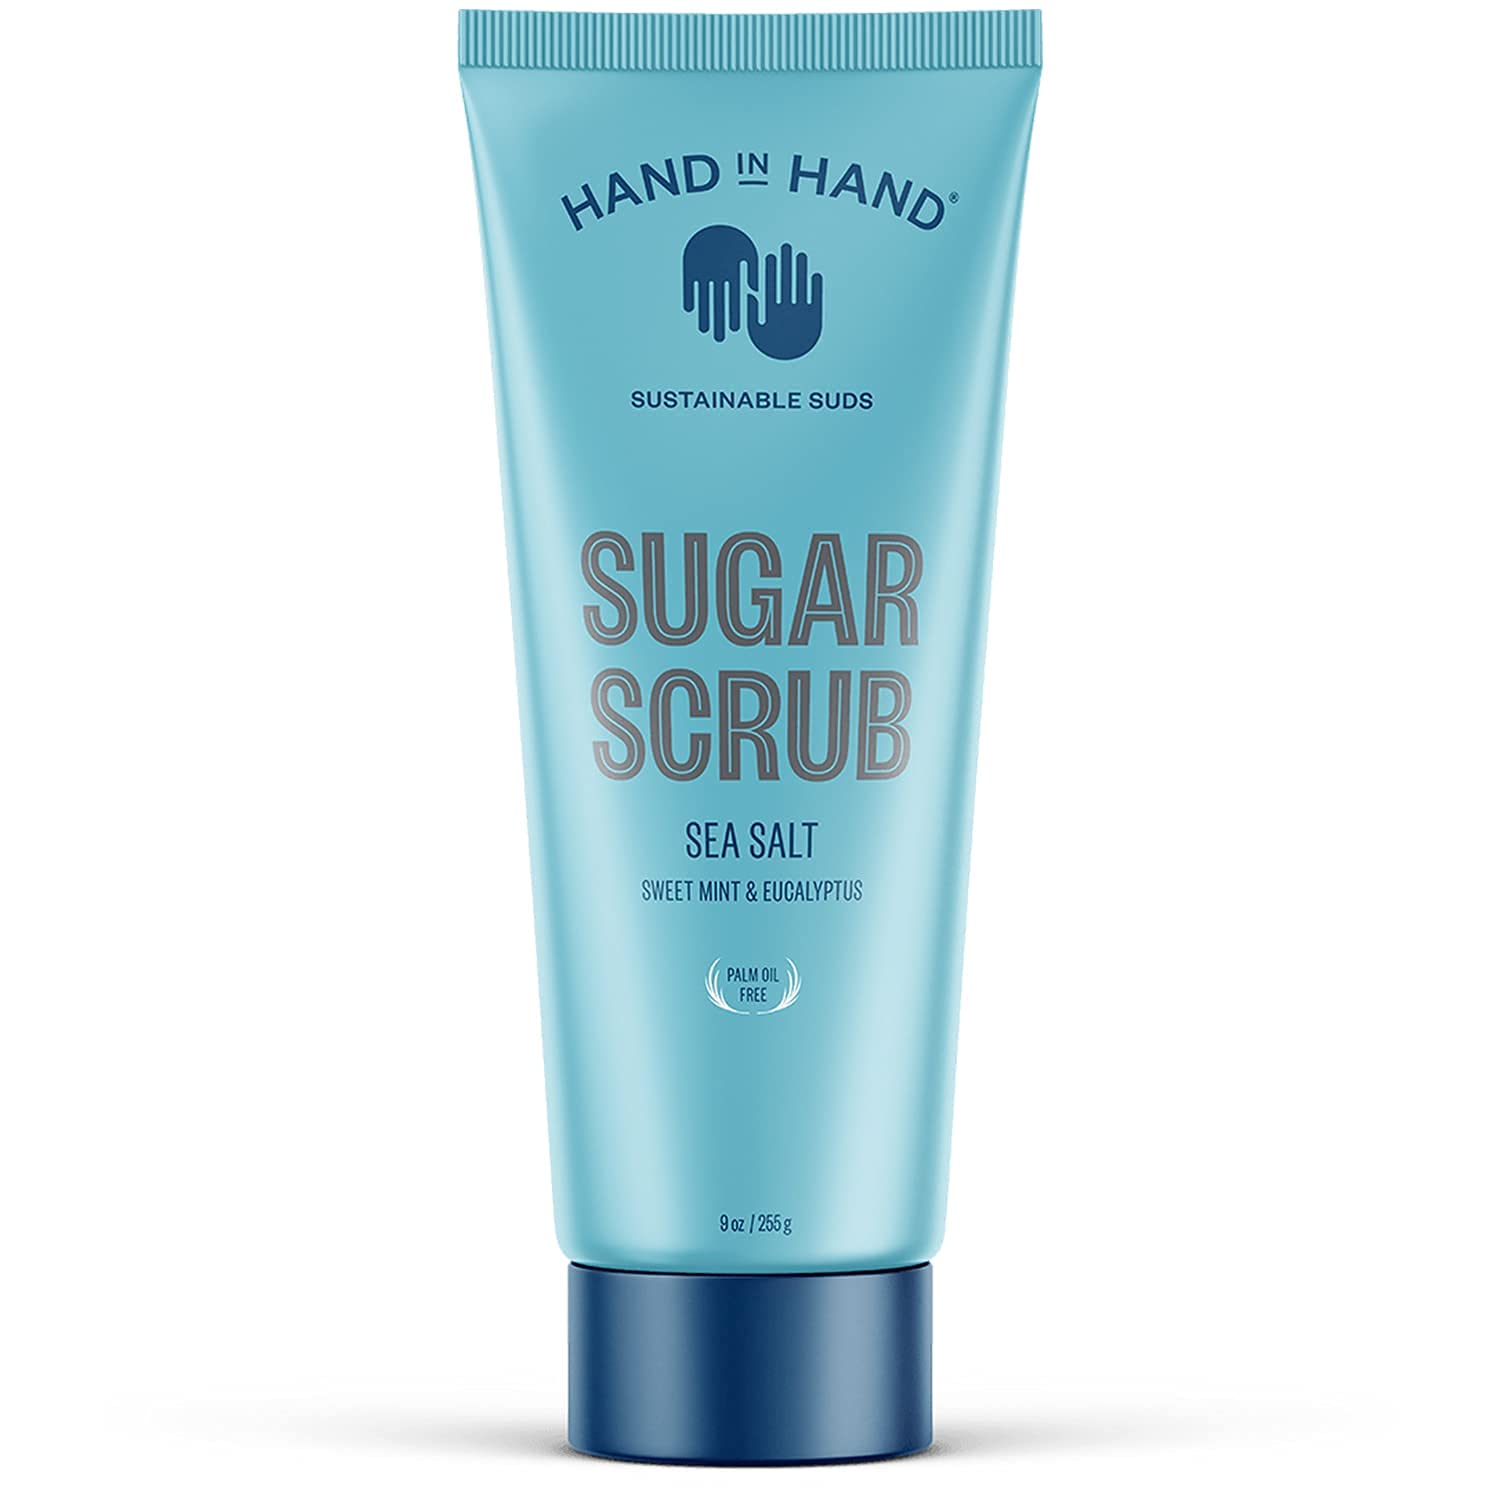 Hand in Hand Sugar Scrub, Gentle Exfoliation For All Skin Types, 9 , Sweet Mint & Eucalyptus, Sea Salt Scent, Single